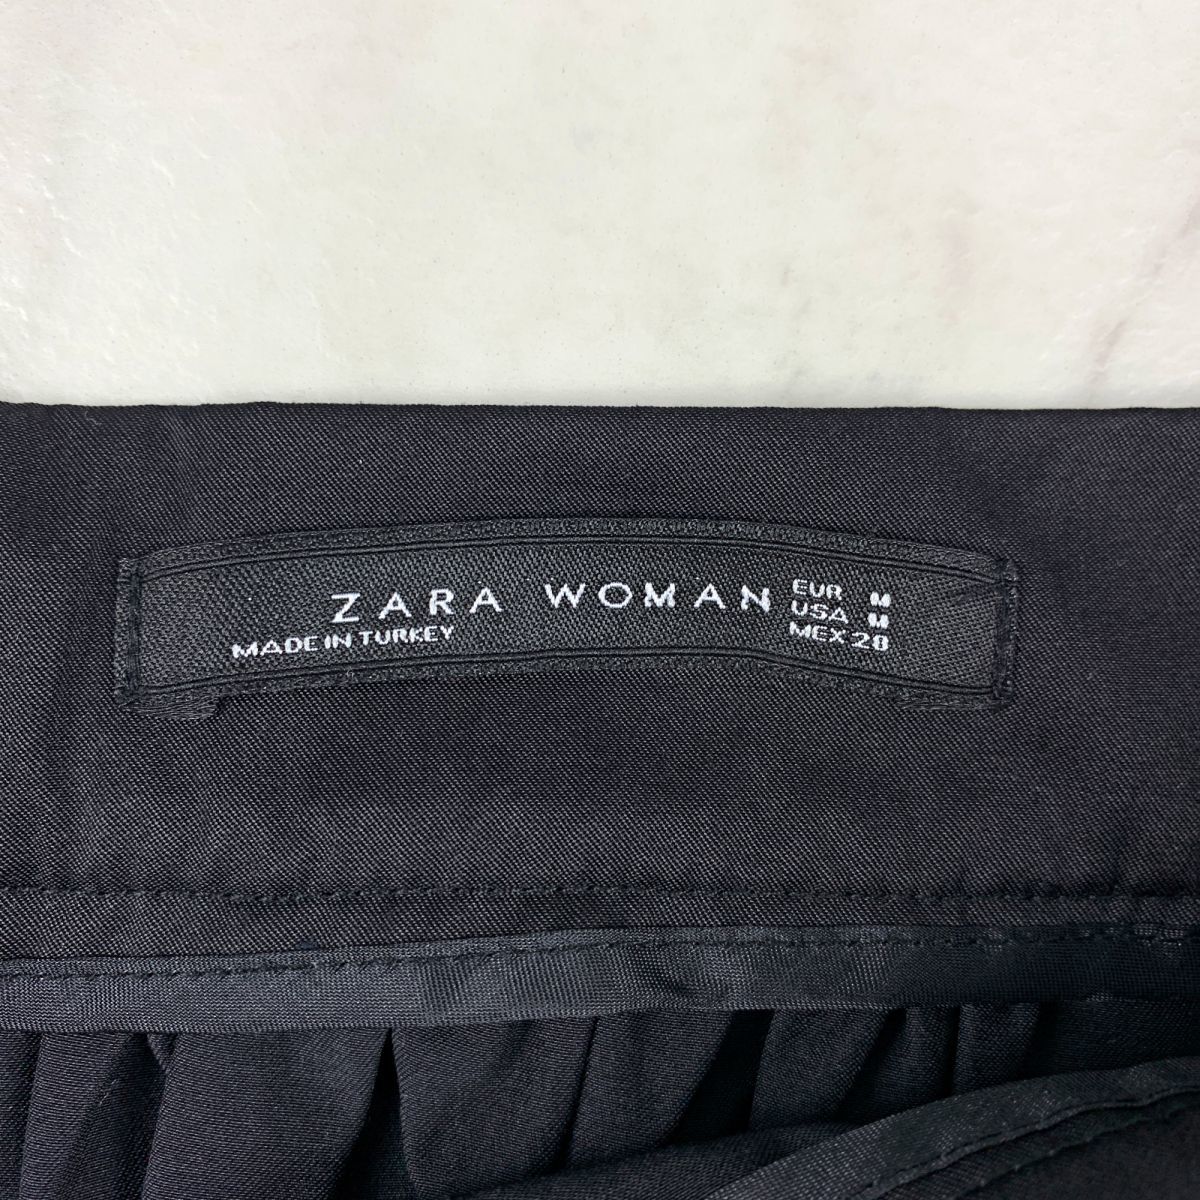 ZARA WOMAN ザラ フレアスカート 膝丈 裏地なし ポケット付き レディース 黒 ブラック サイズM*KB1871_画像5